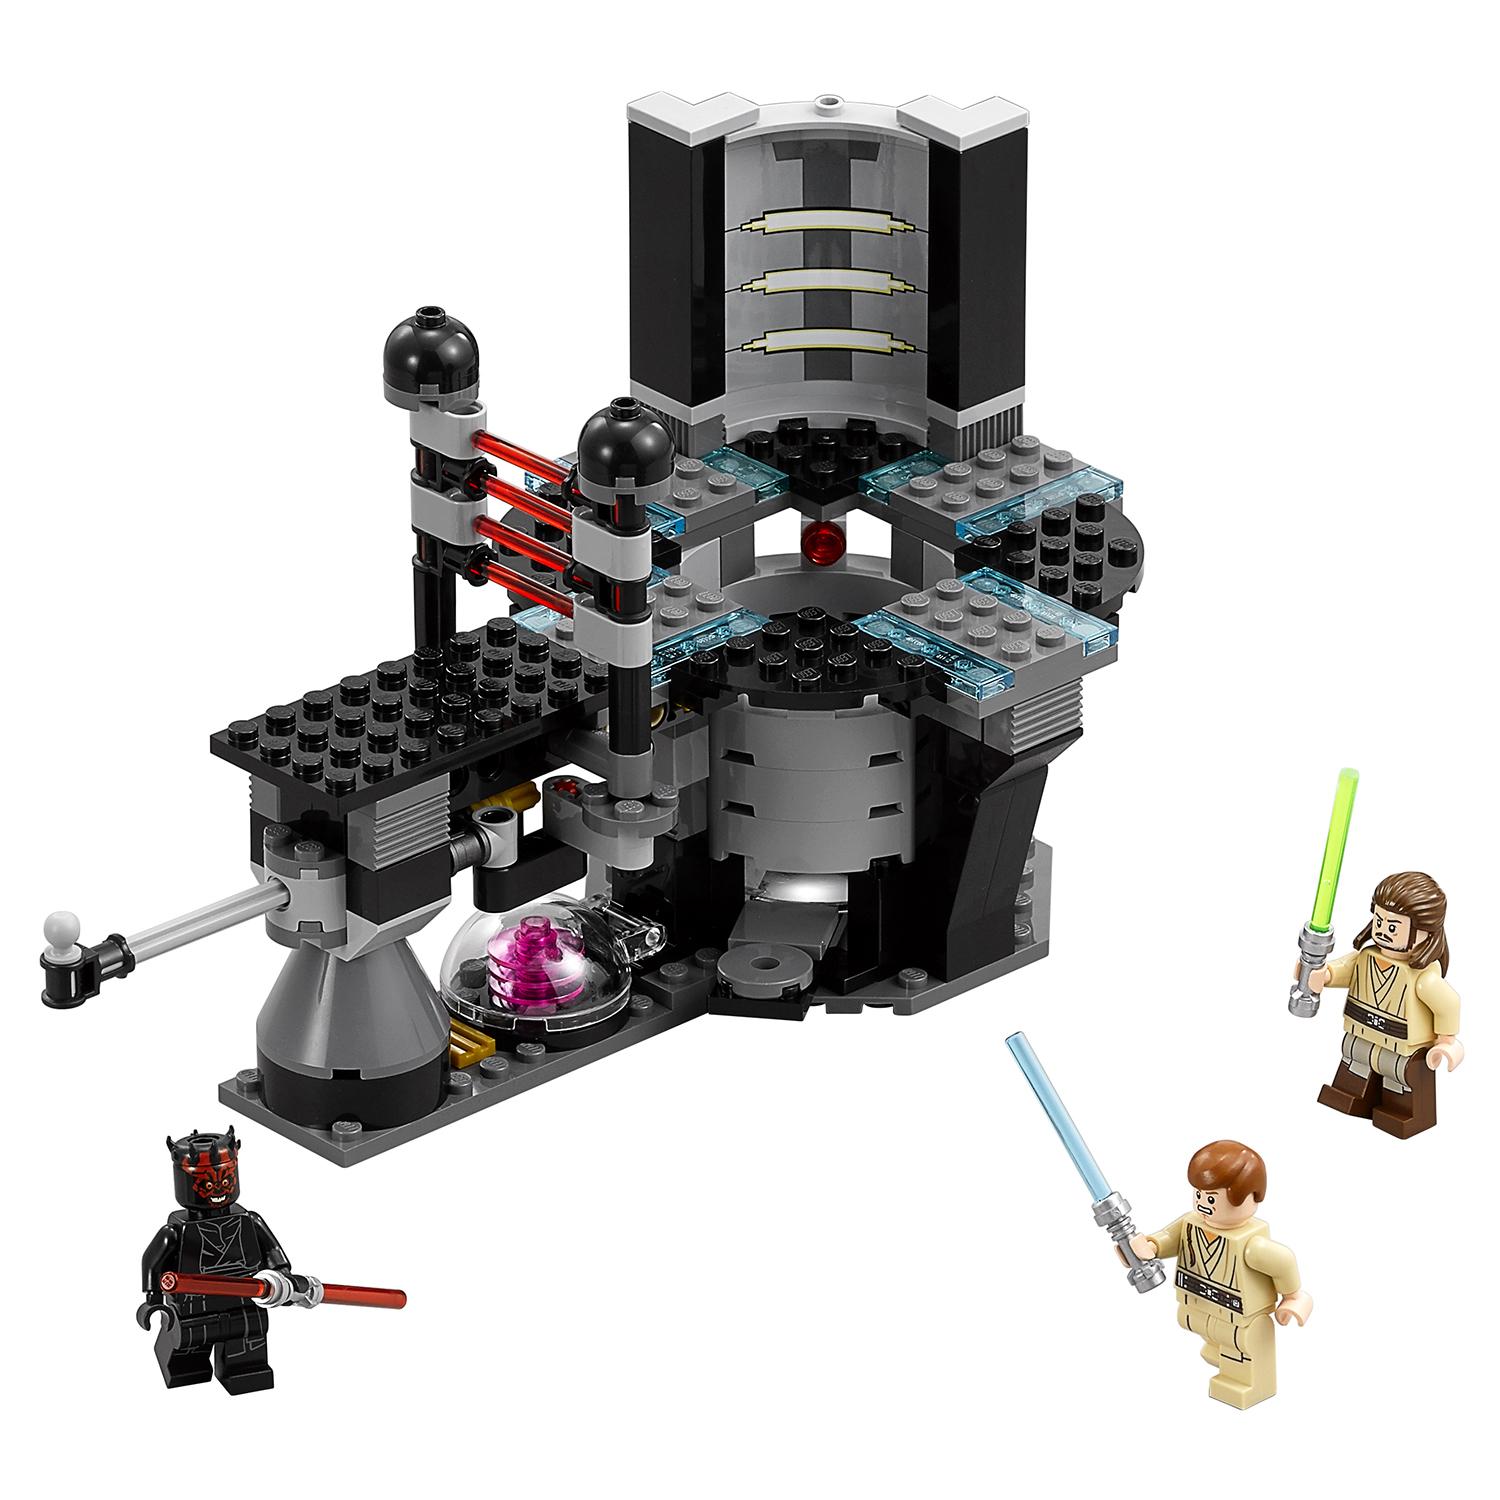 Lego Star Wars 75169 Дуэль на Набу